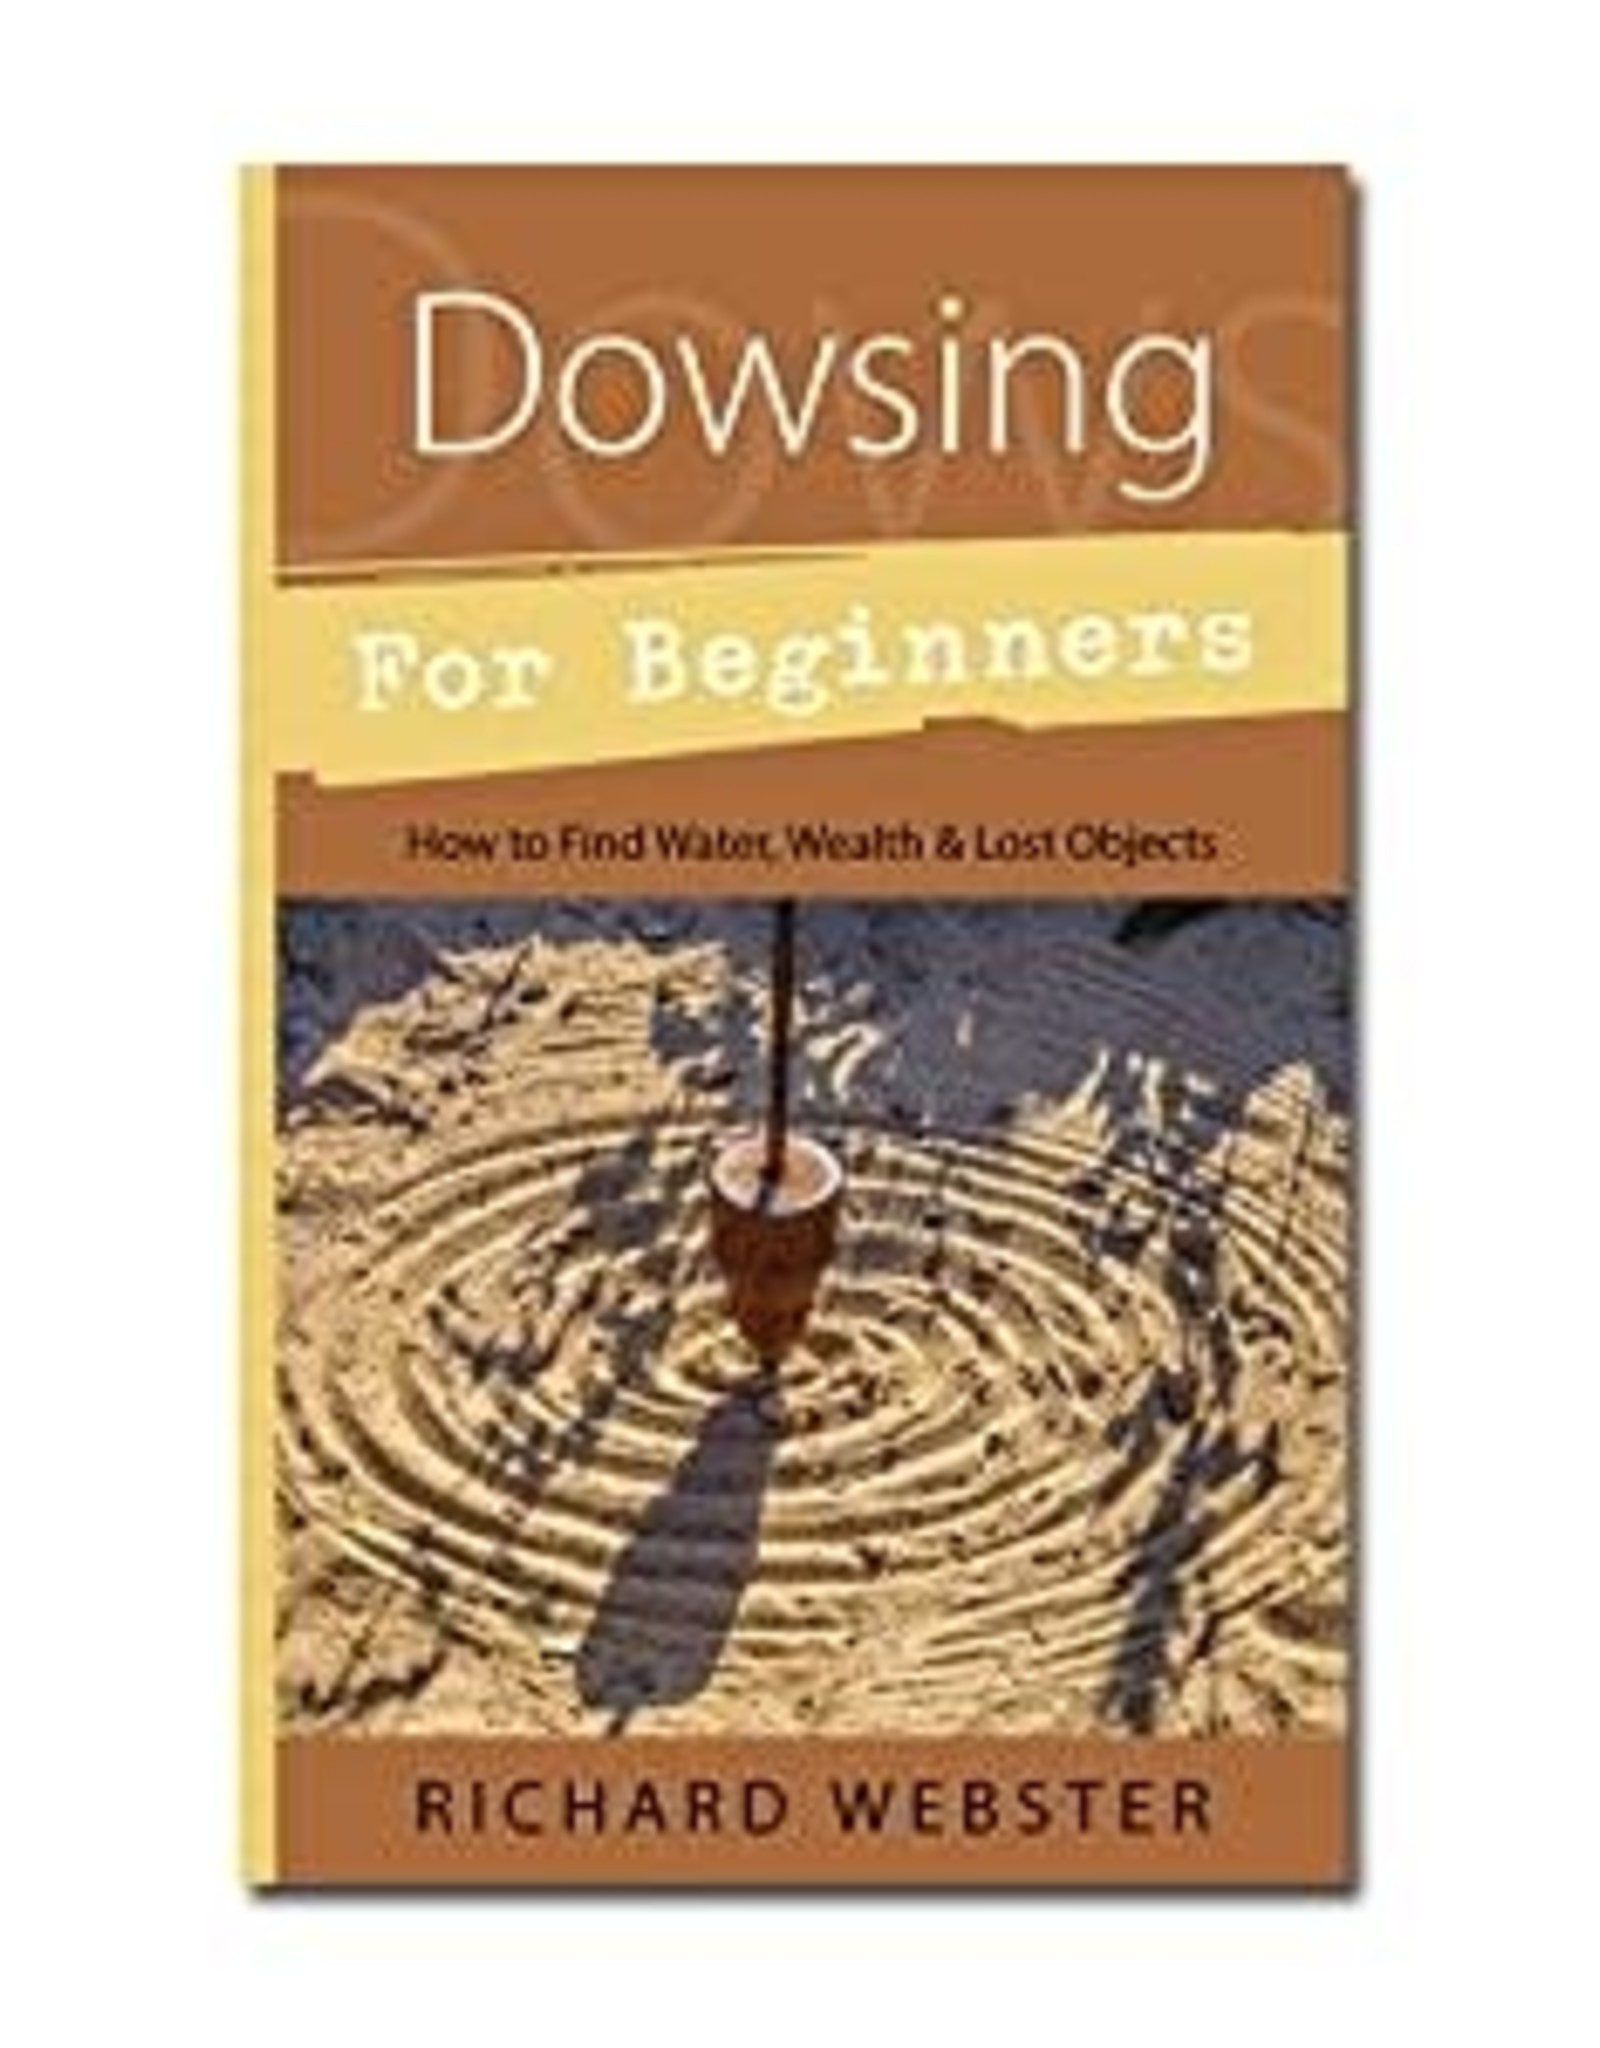 Richard Webster Dowsing for Beginners by Richard Webster